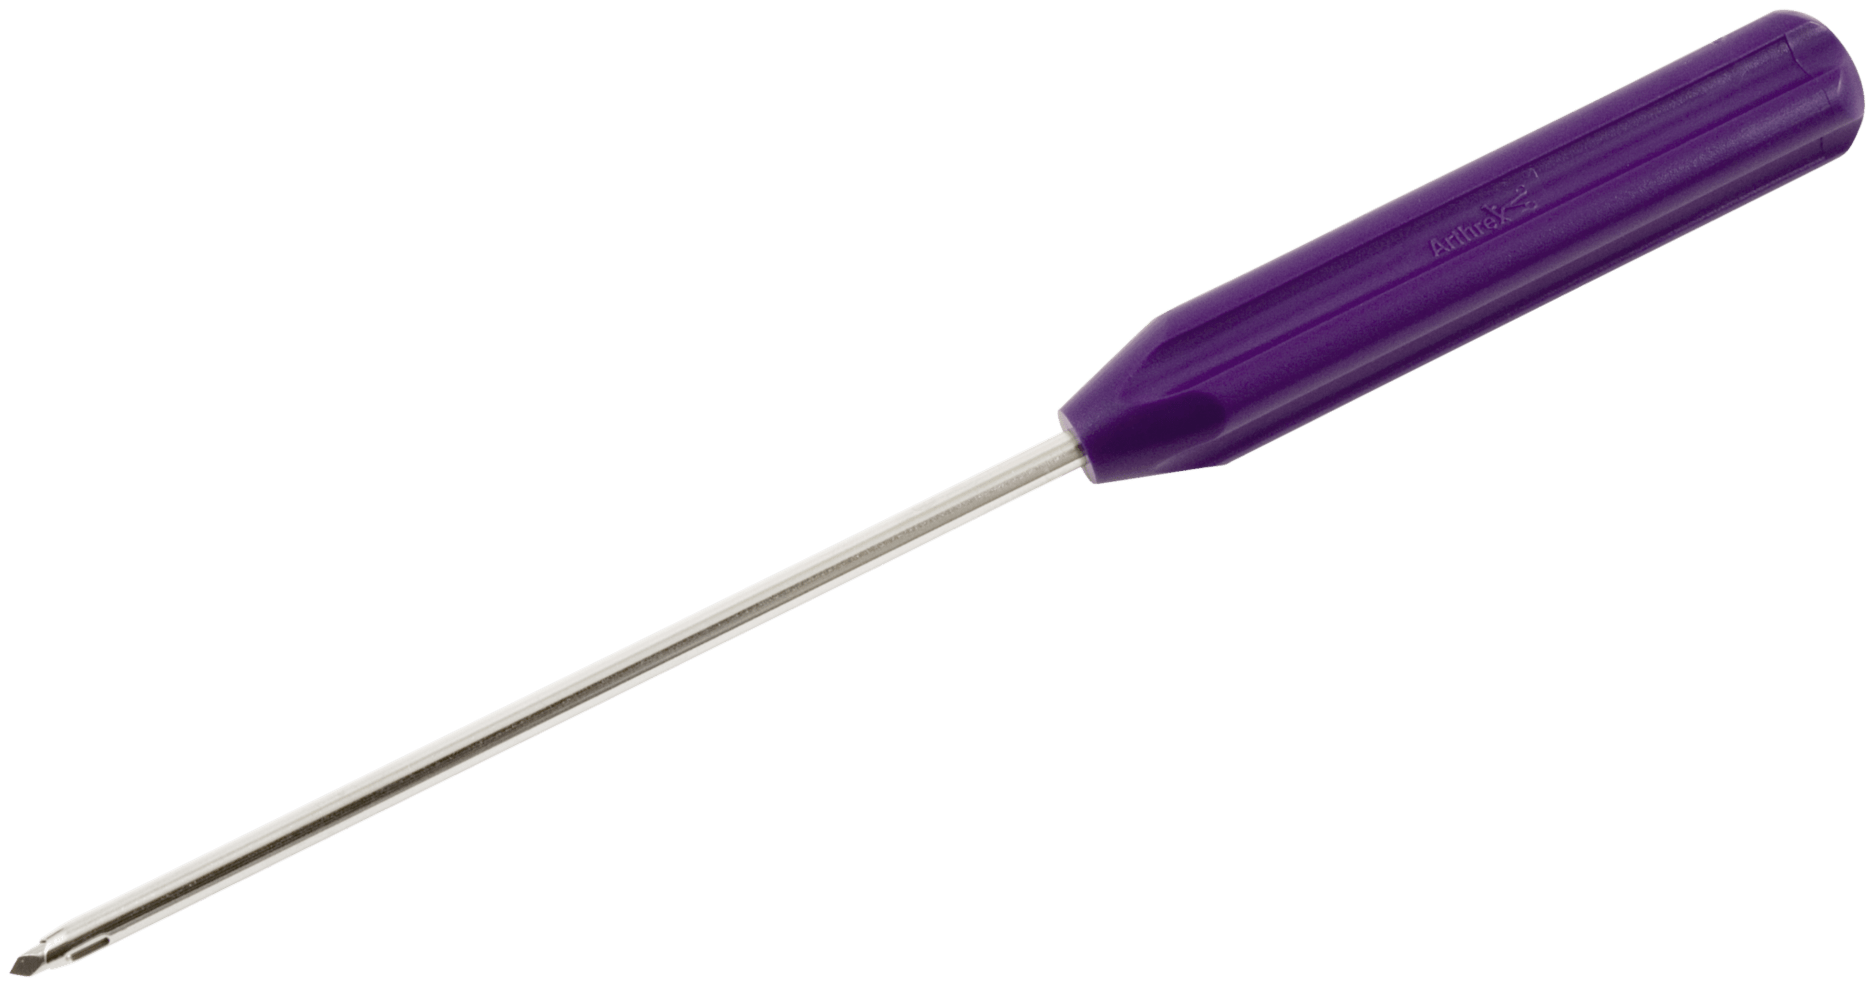 Disposable Spear, Trocar Tip Obturator for 3 mm SutureTak, 2.4 mm and 2.9 mm PushLock